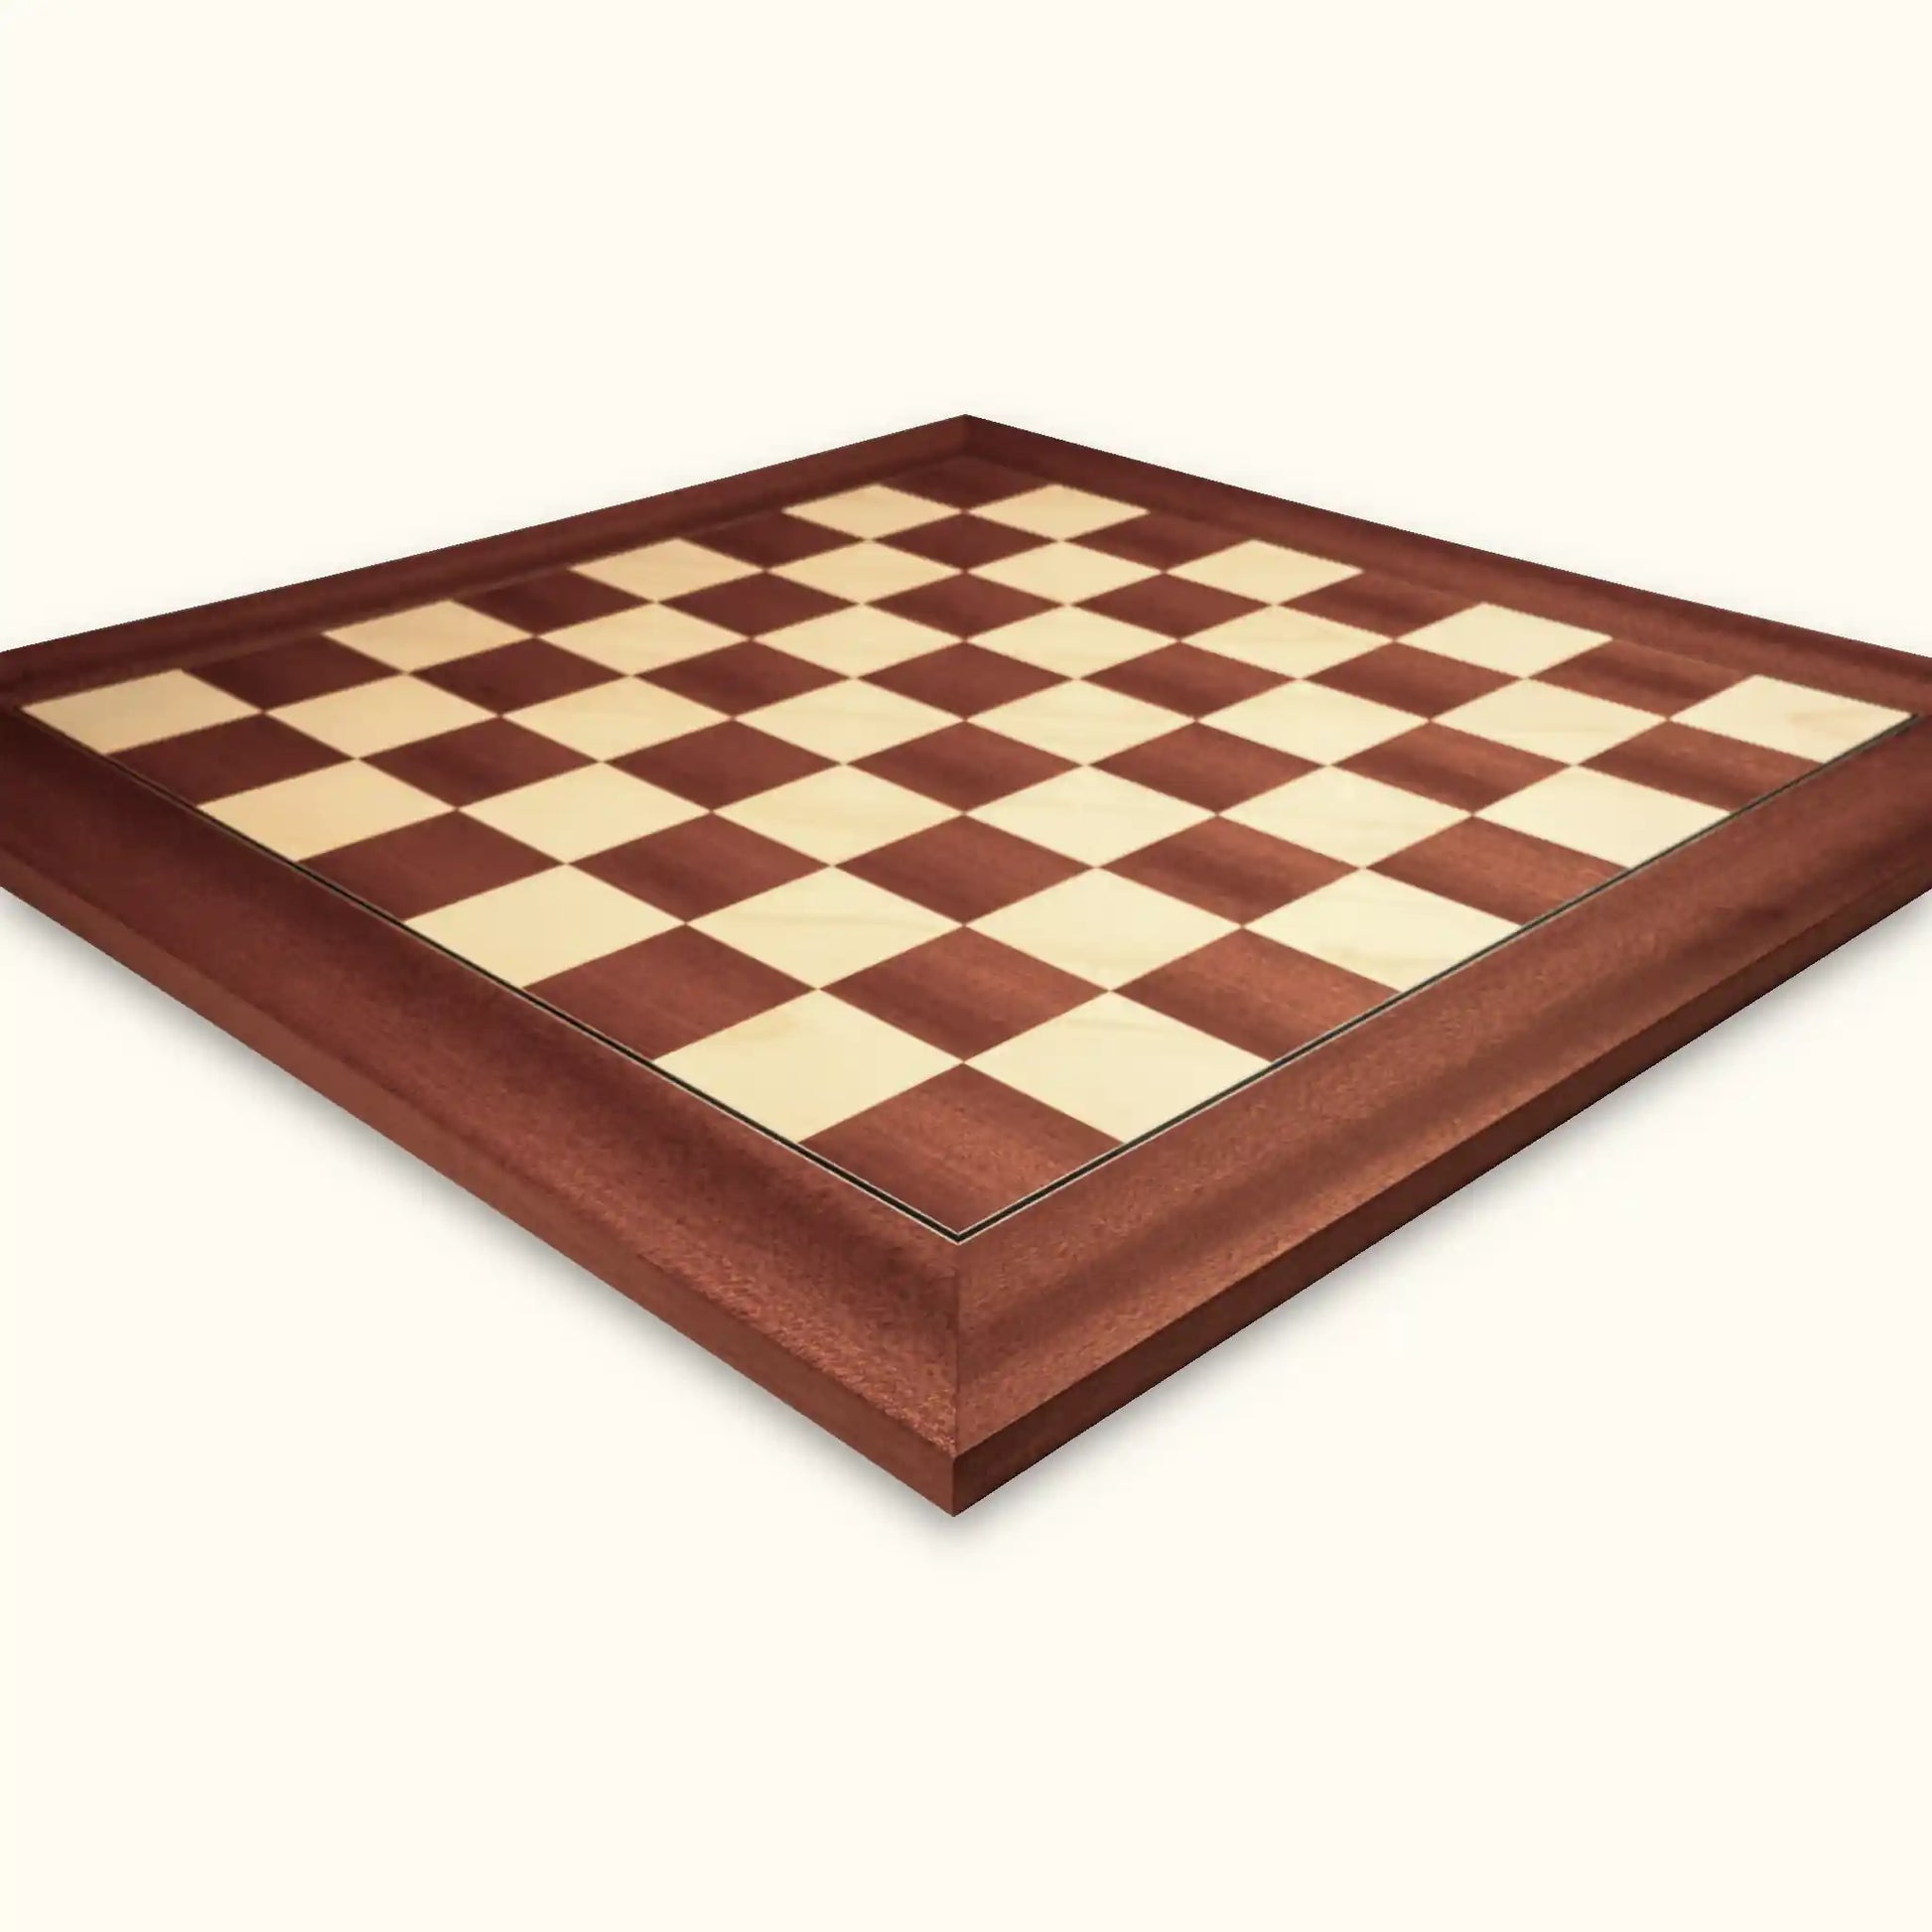 Chessboard mahogany deluxe 55 mm diagonal view